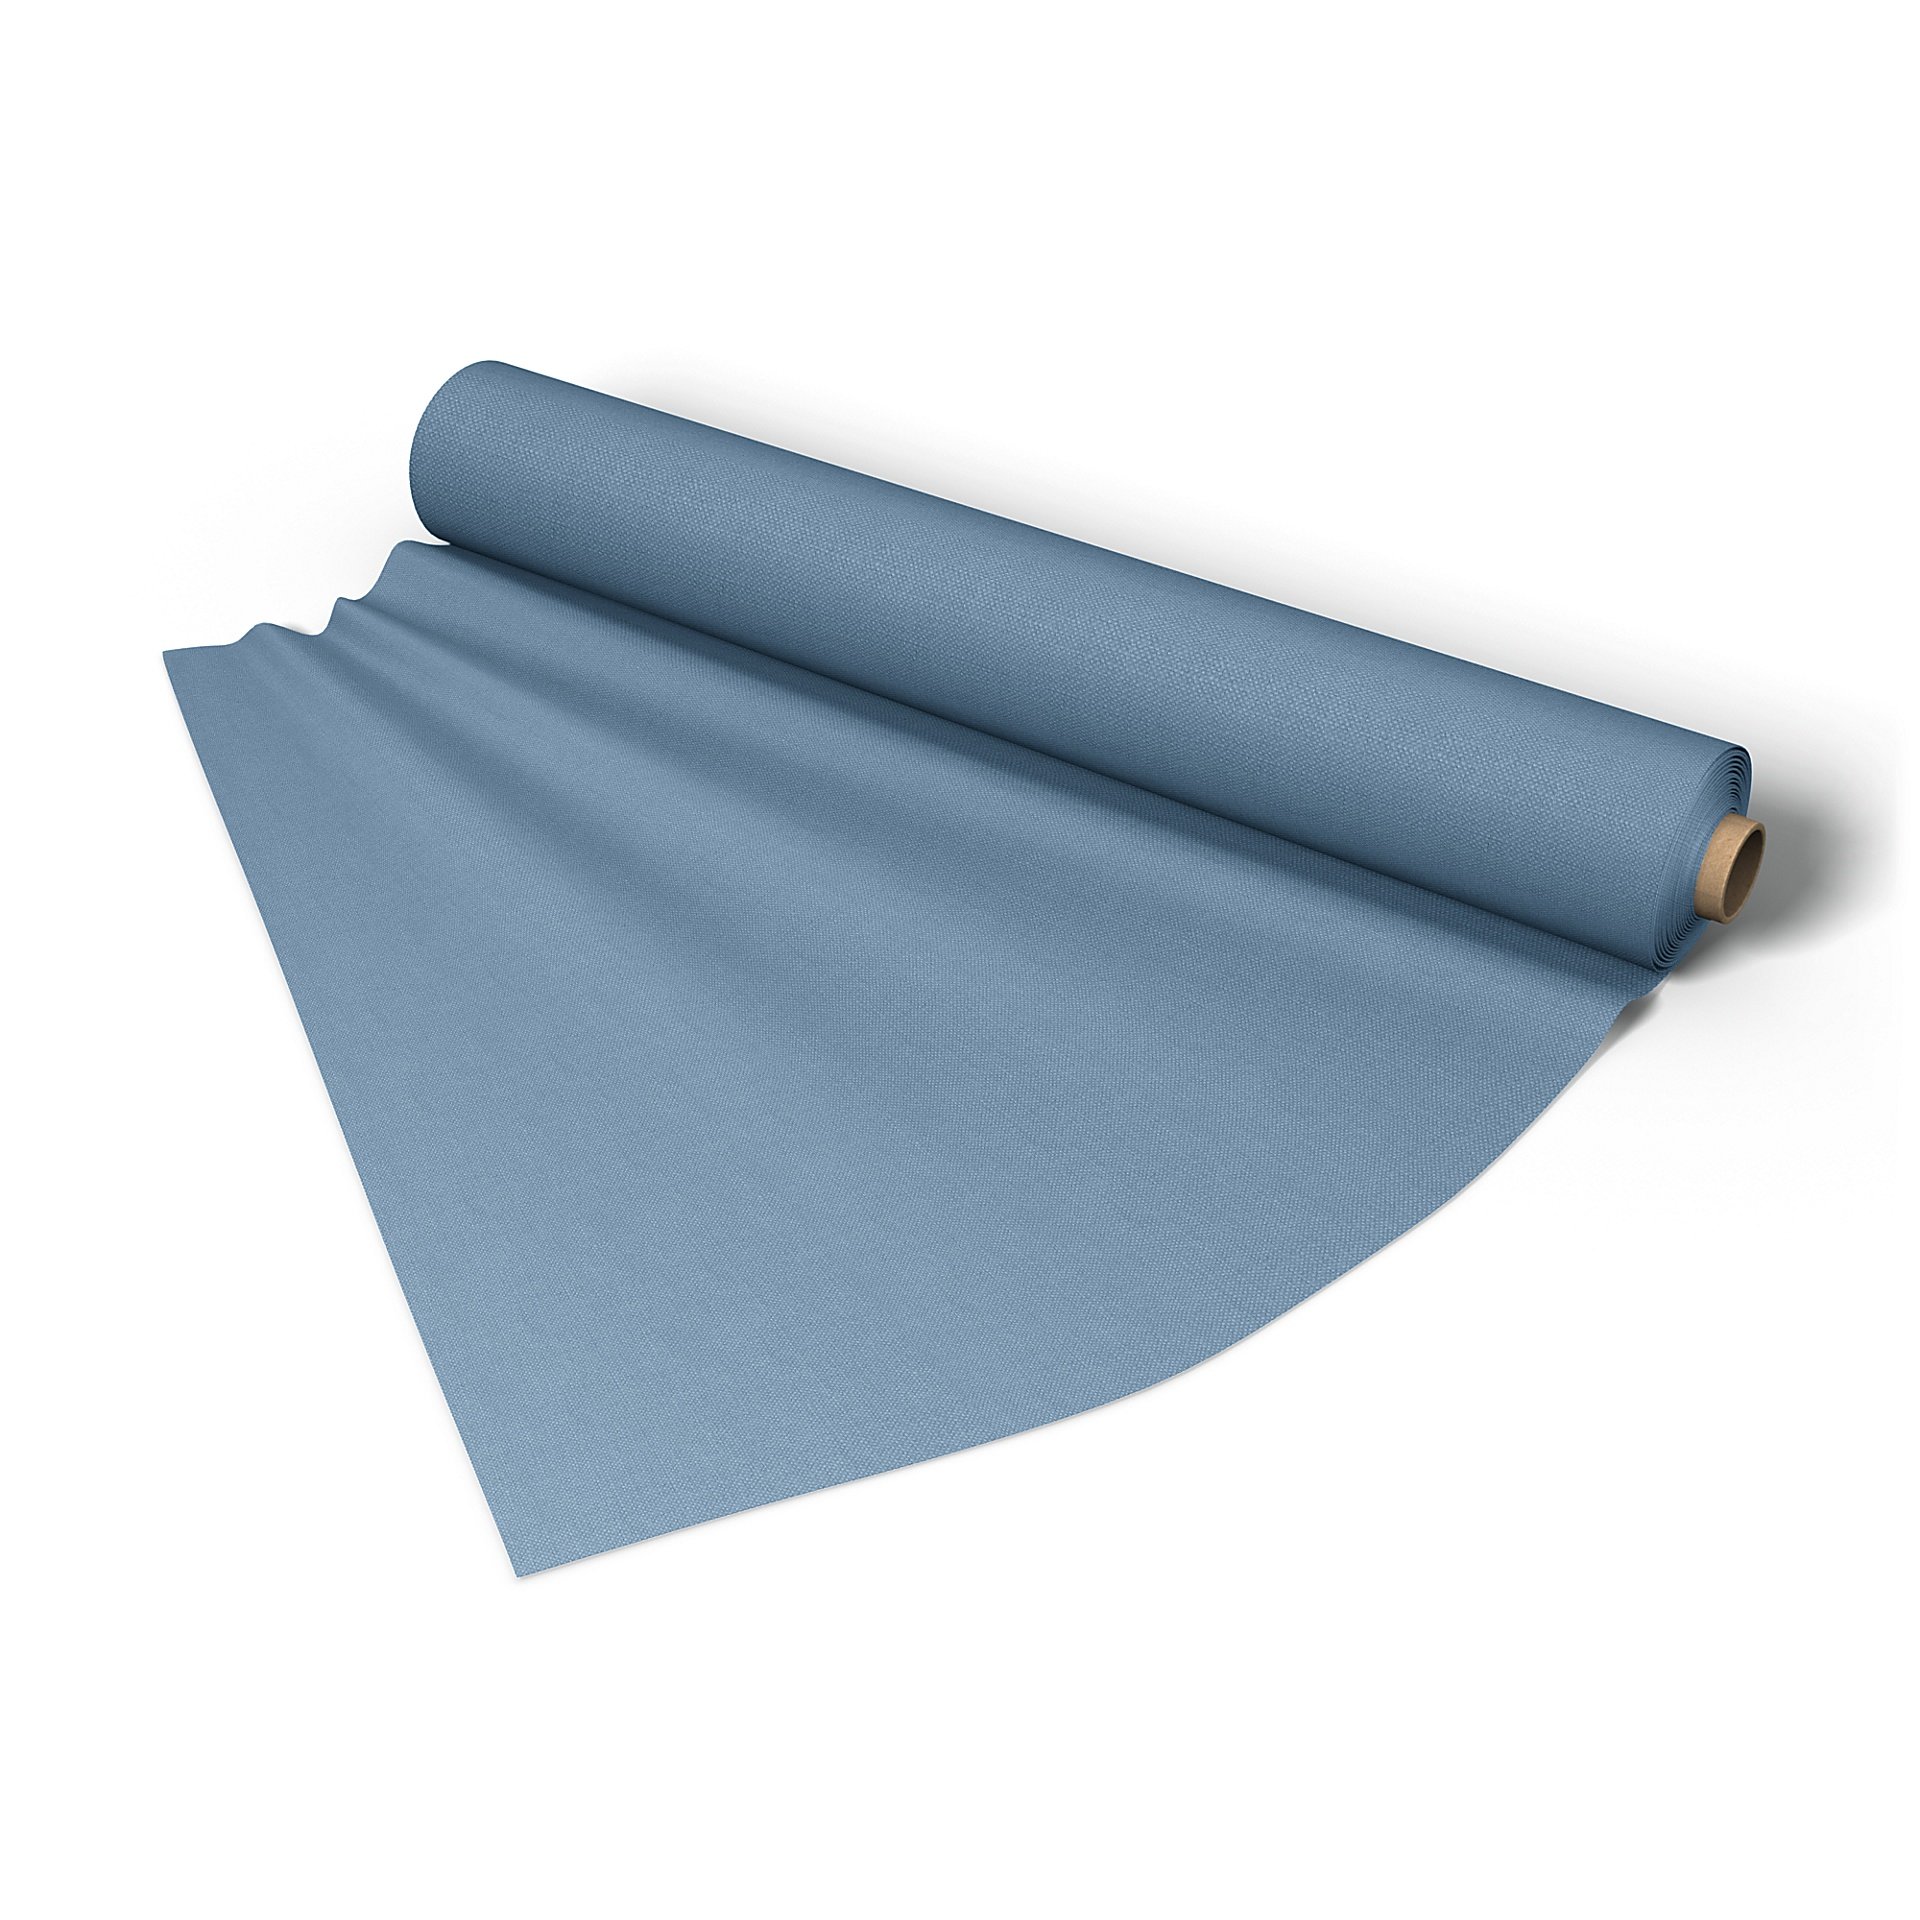 Fabric per metre, Vintage Blue, Linen - Bemz